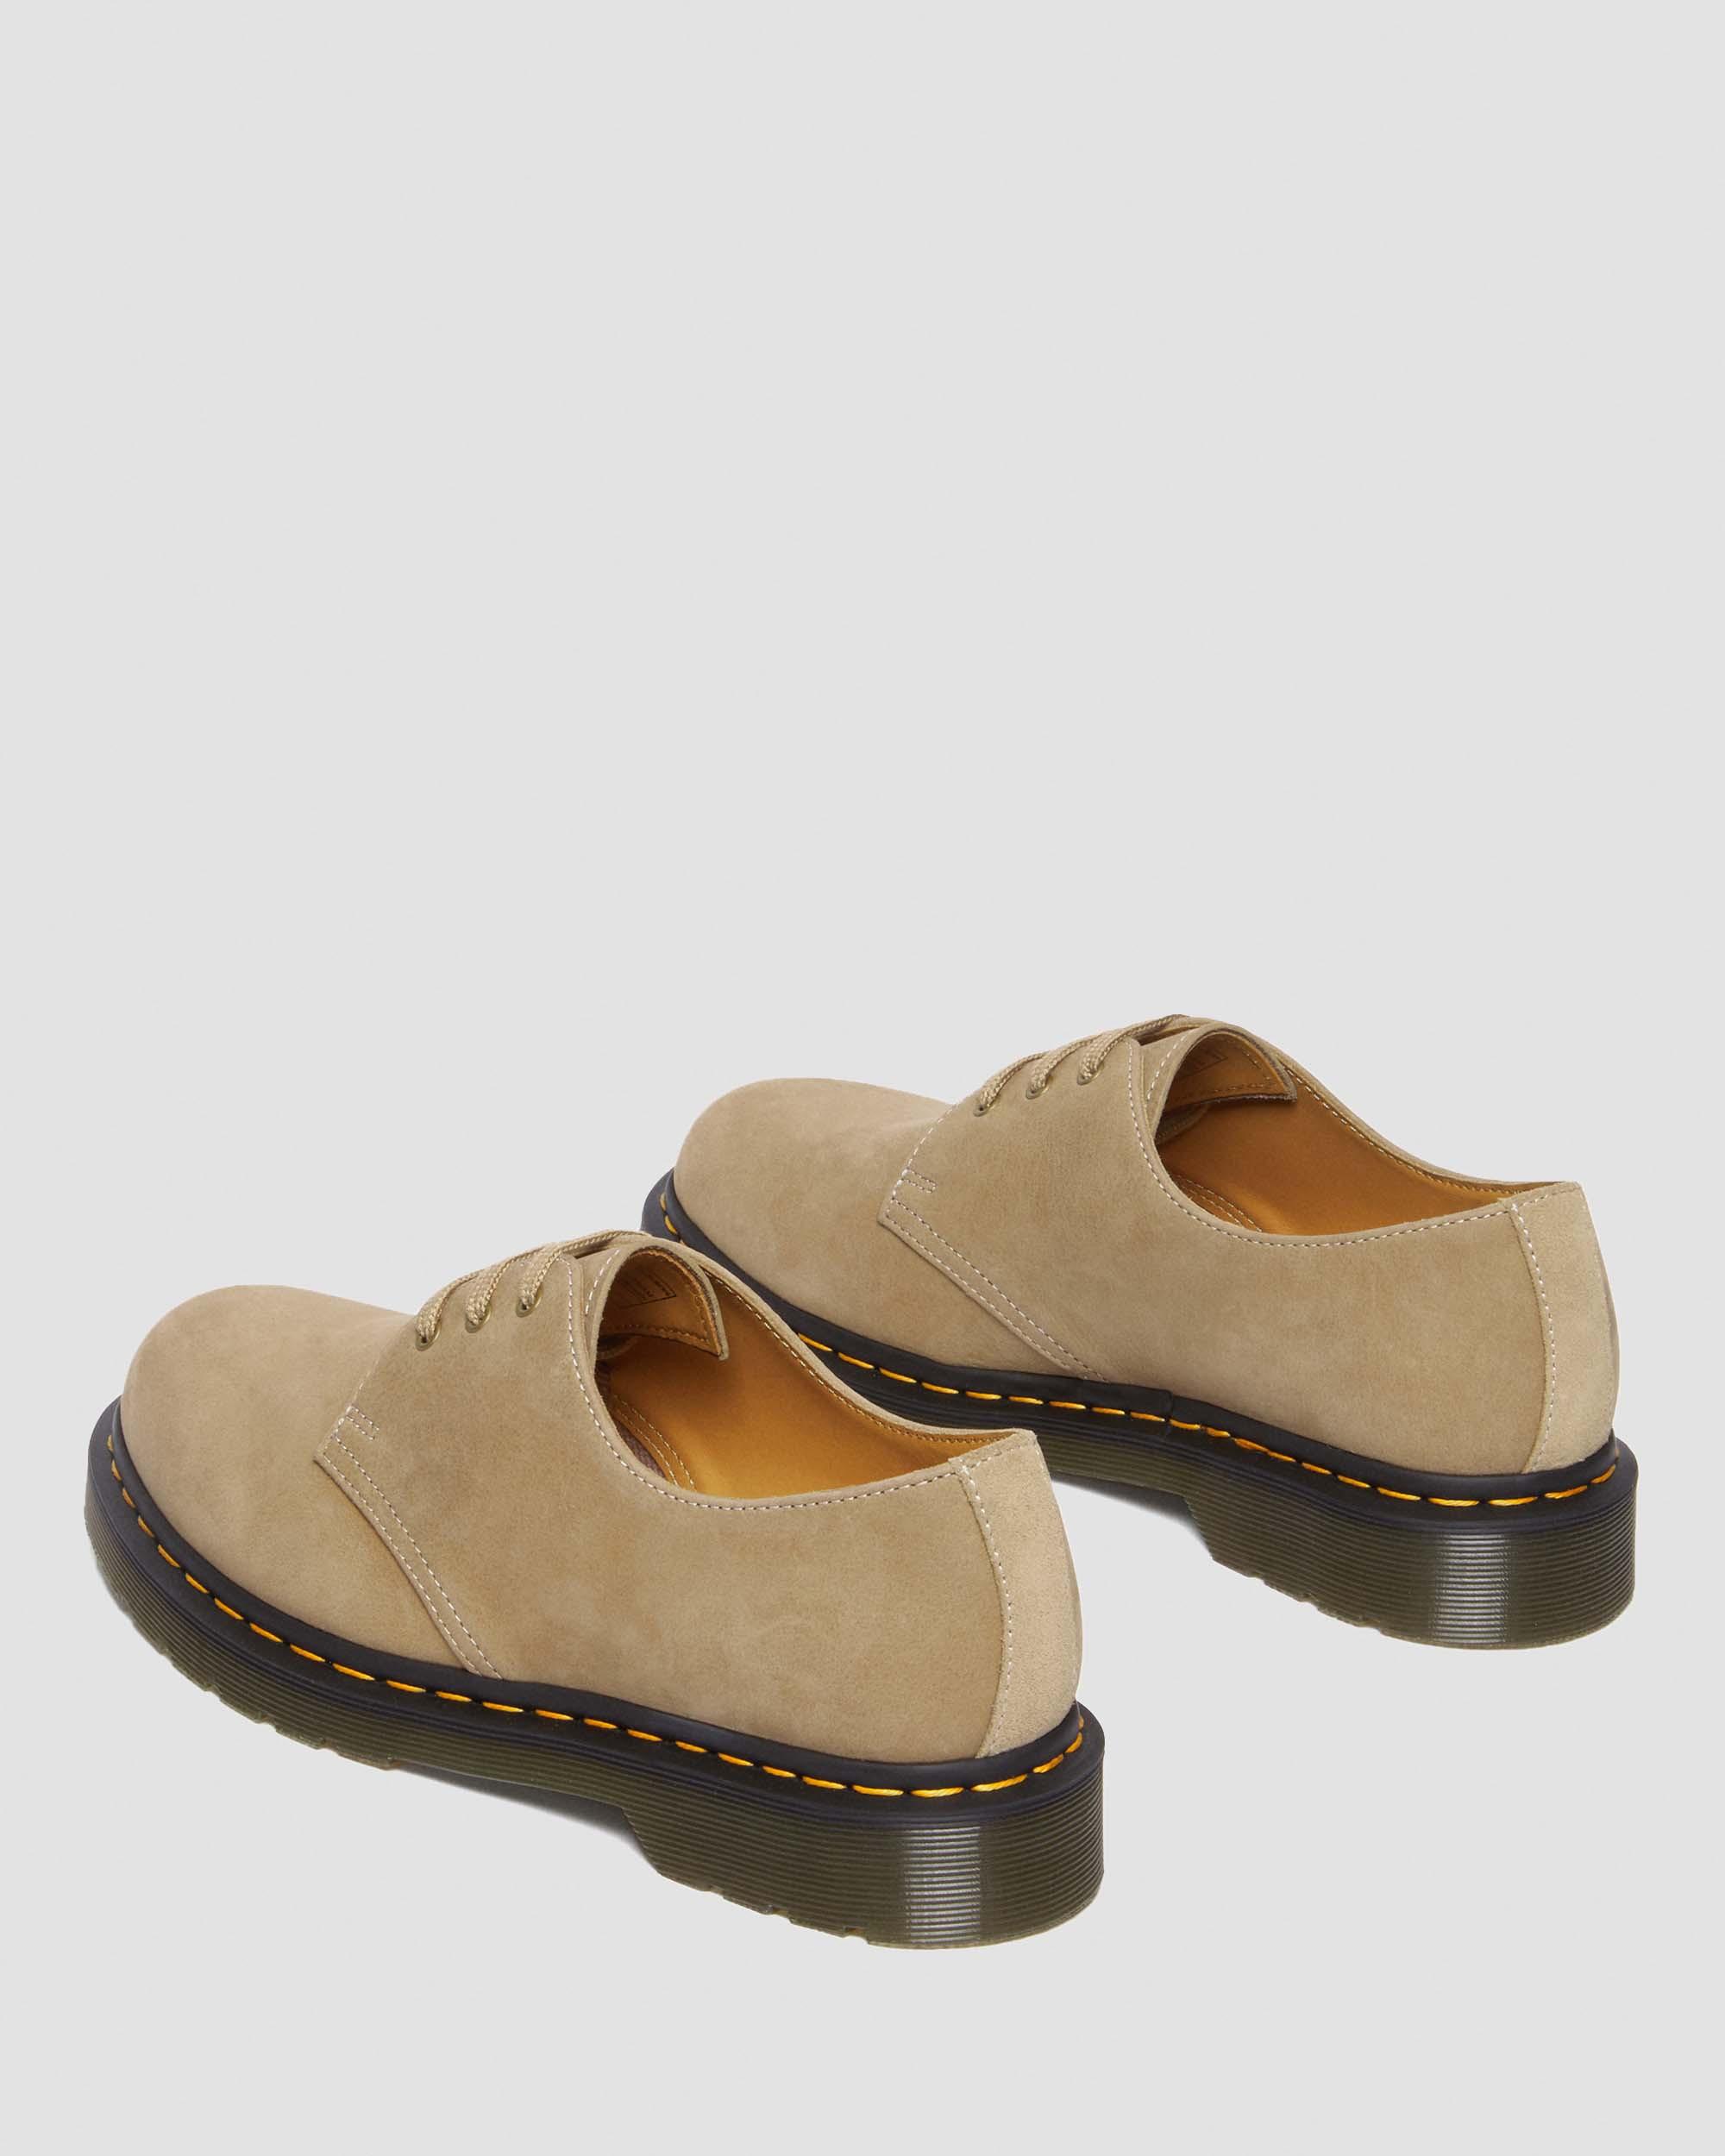 1461 Tumbled Nubuck Leather Oxford Shoes in Savannah Tan